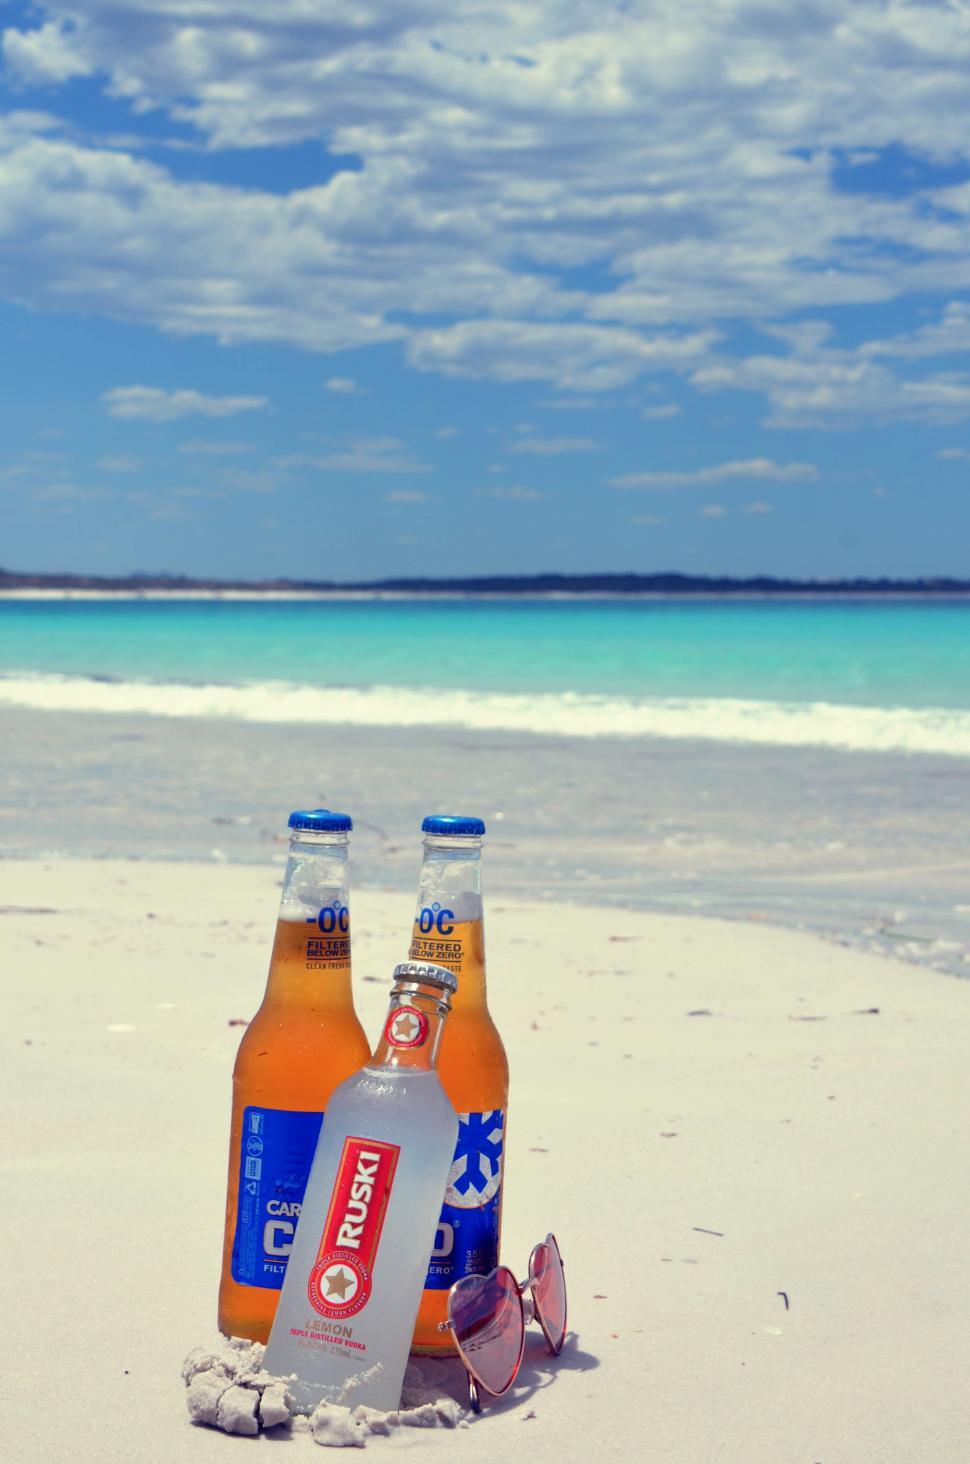 Free Image of Beer Bottles at beach  